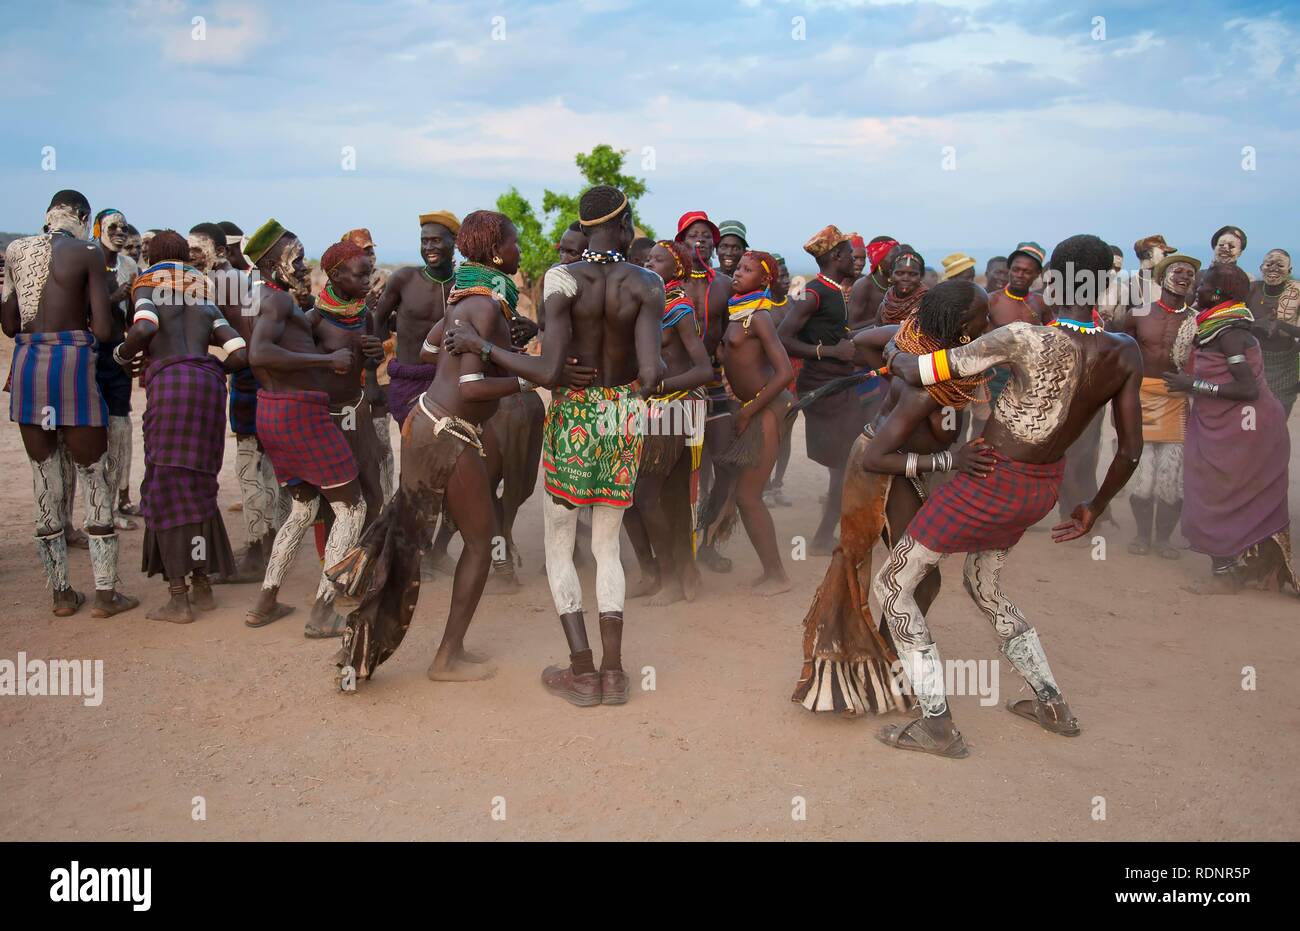 Nyangatom, Bumi, dance ceremony, dancing men and women, Omo river Valley, Ethiopia, Africa Stock Photo